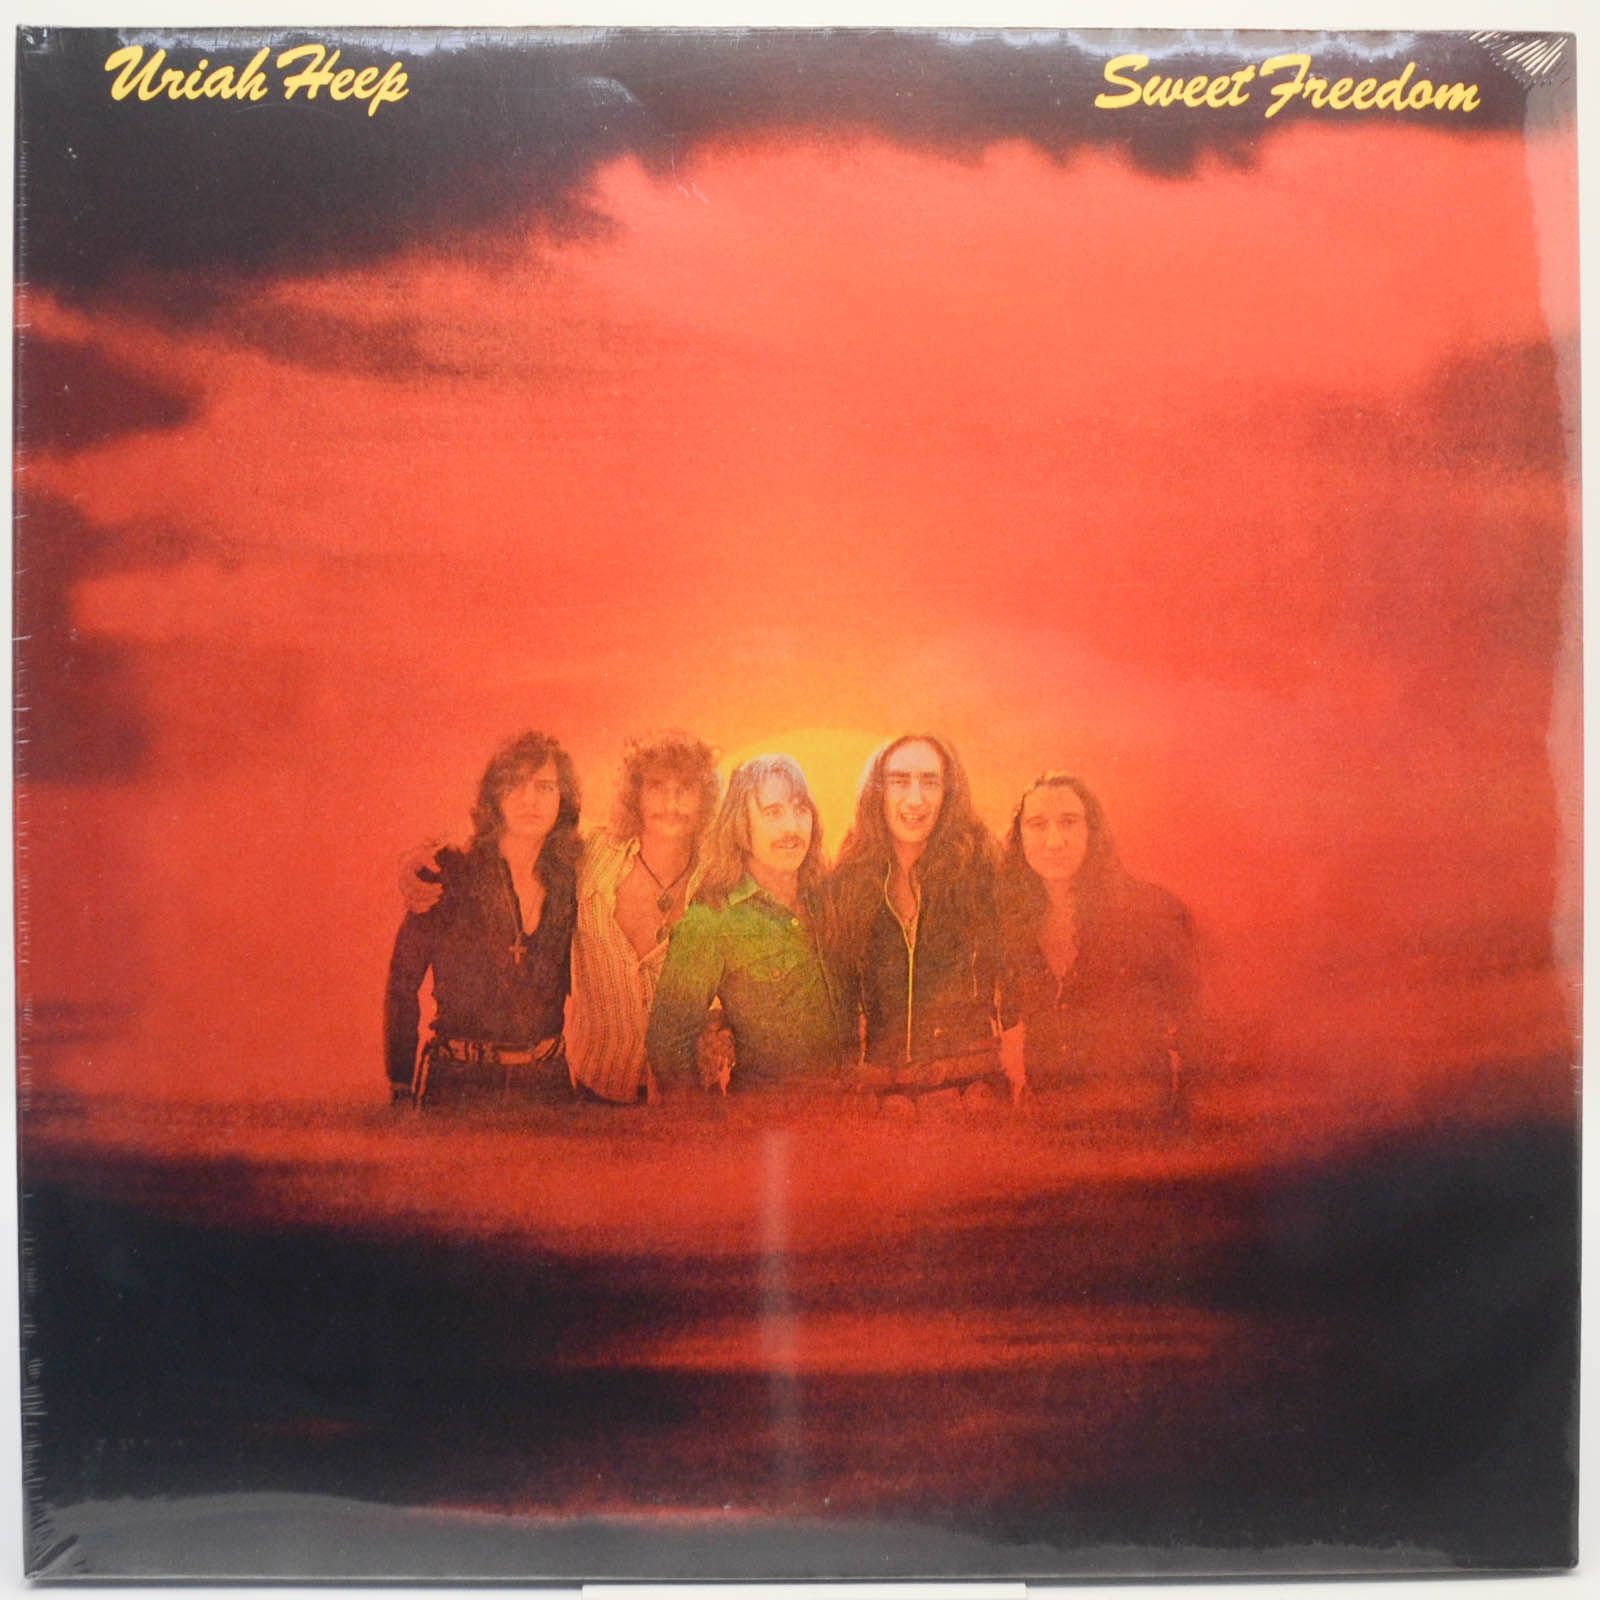 Uriah Heep — Sweet Freedom, 1973